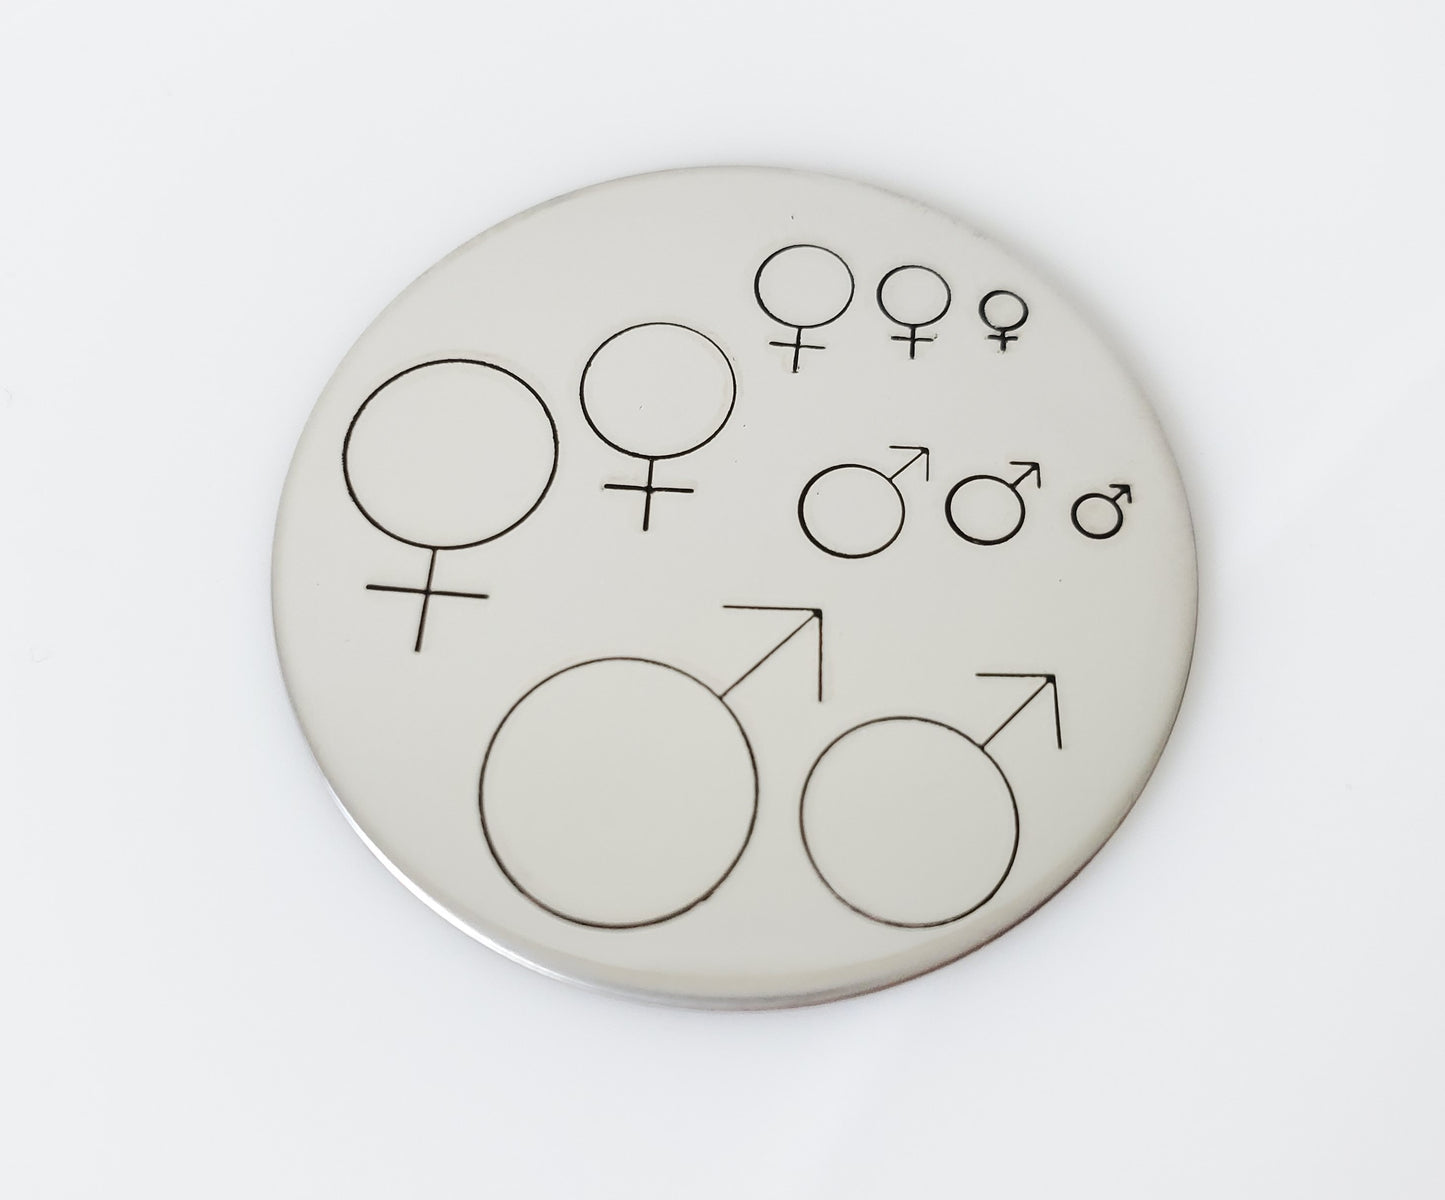 Male / Female Symbols